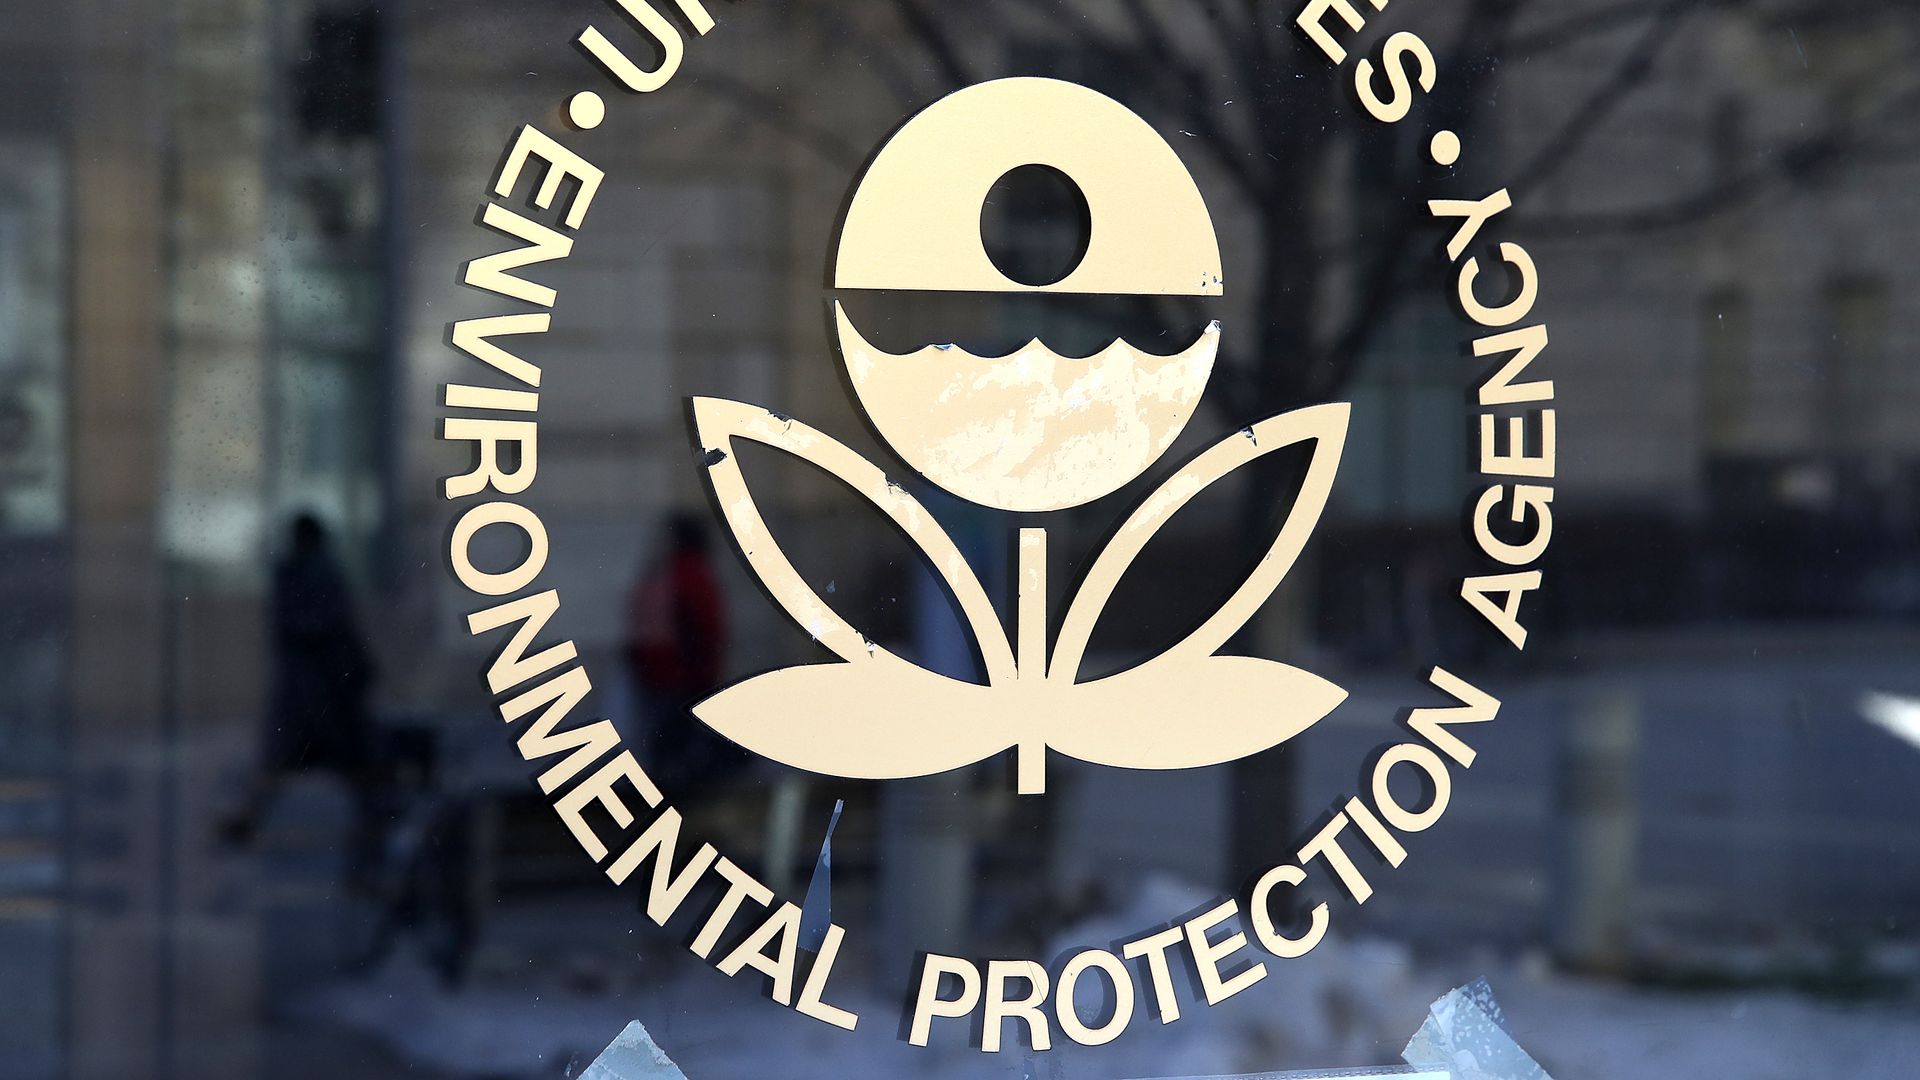 The U.S. Environmental Protection Agency's (EPA) logo